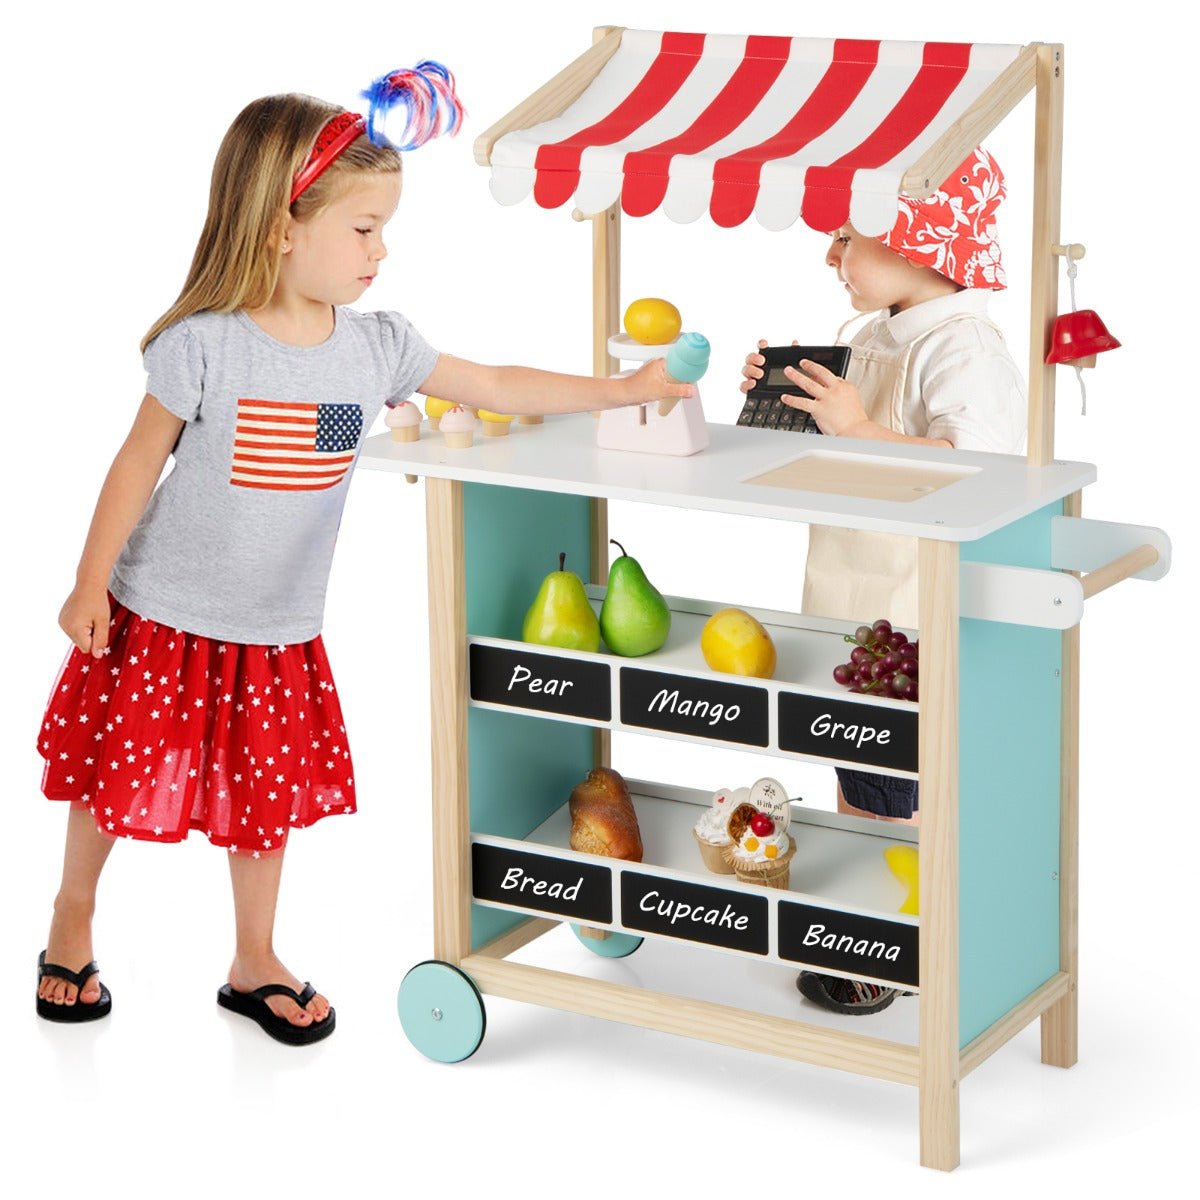 Joyful Ice Cream Play: Kids Wooden Ice Cream Cart with Chalkboard & Storage